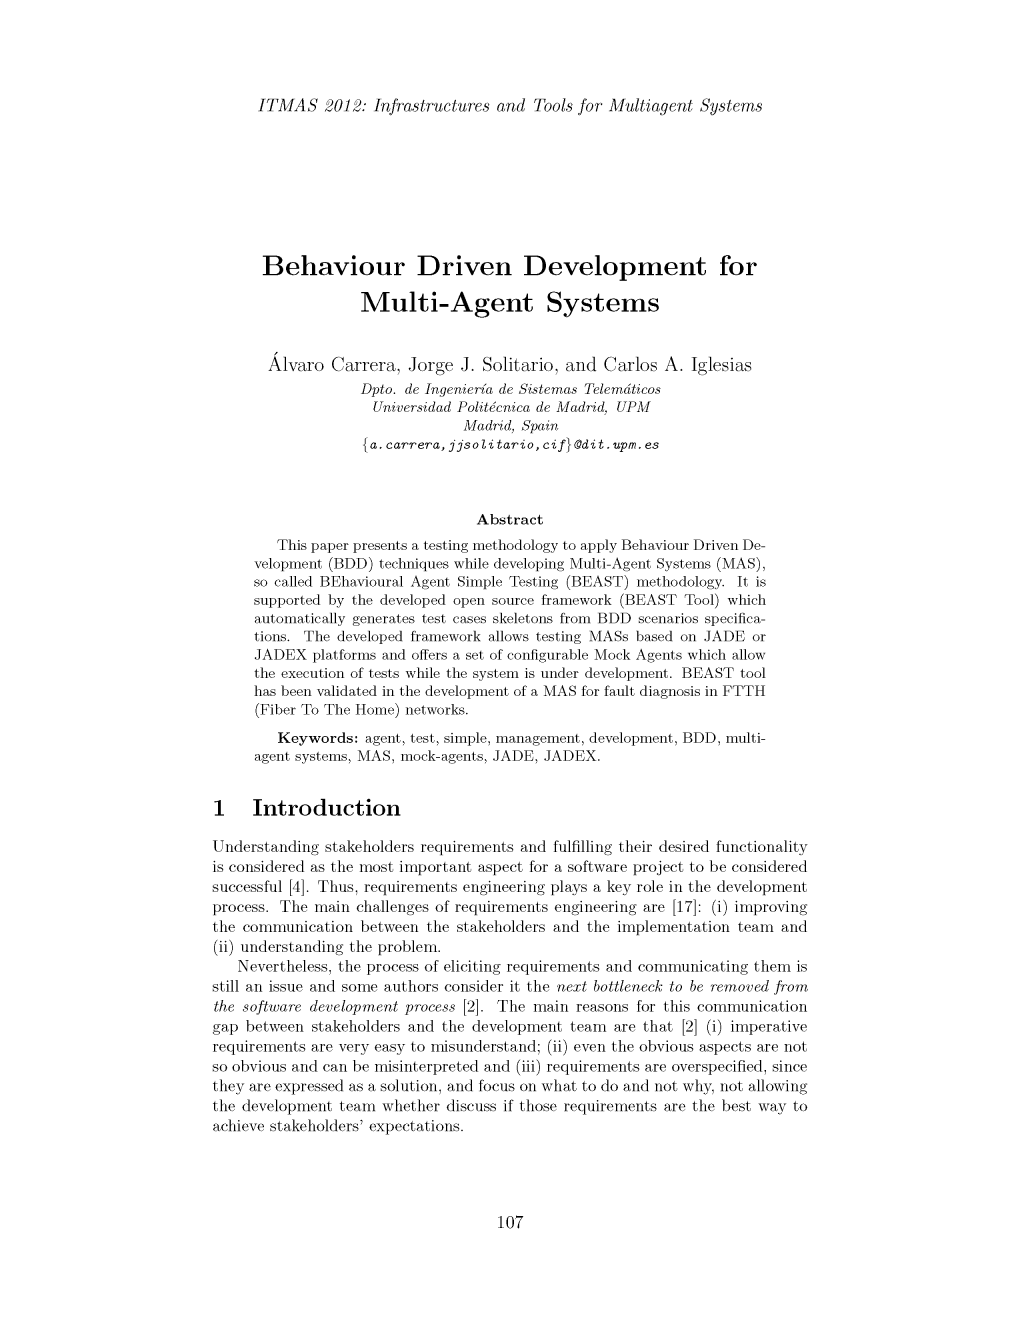 Behaviour Driven Development for Multi-Agent Systems